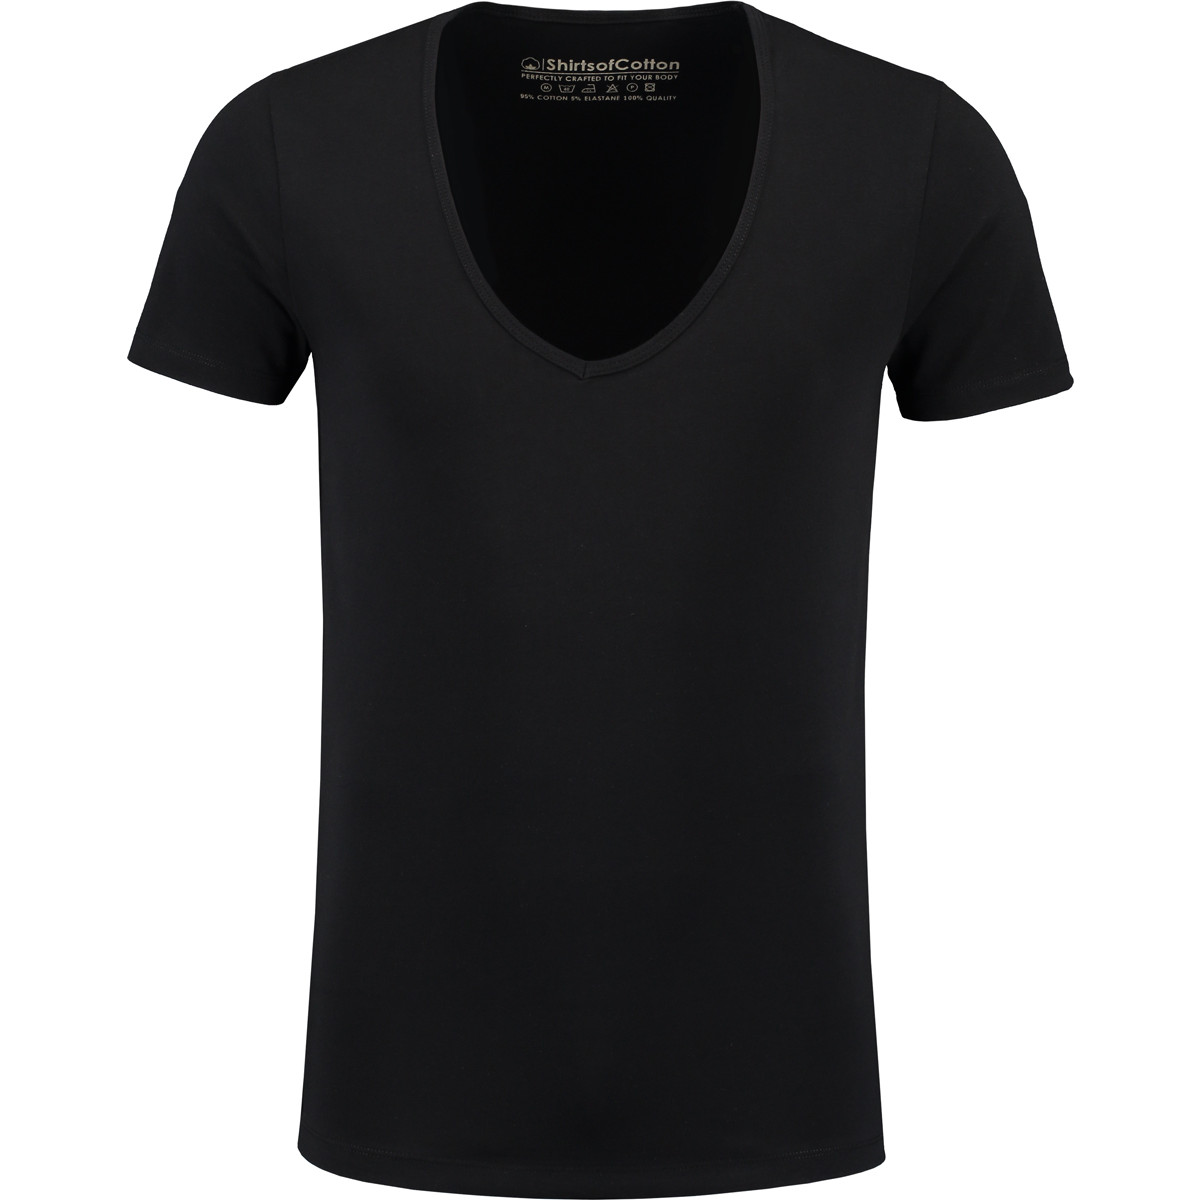 Black Shirts zwart extra lang extra diepe v-hals t-shirt - shirtsofcotton ... IQKDQKX